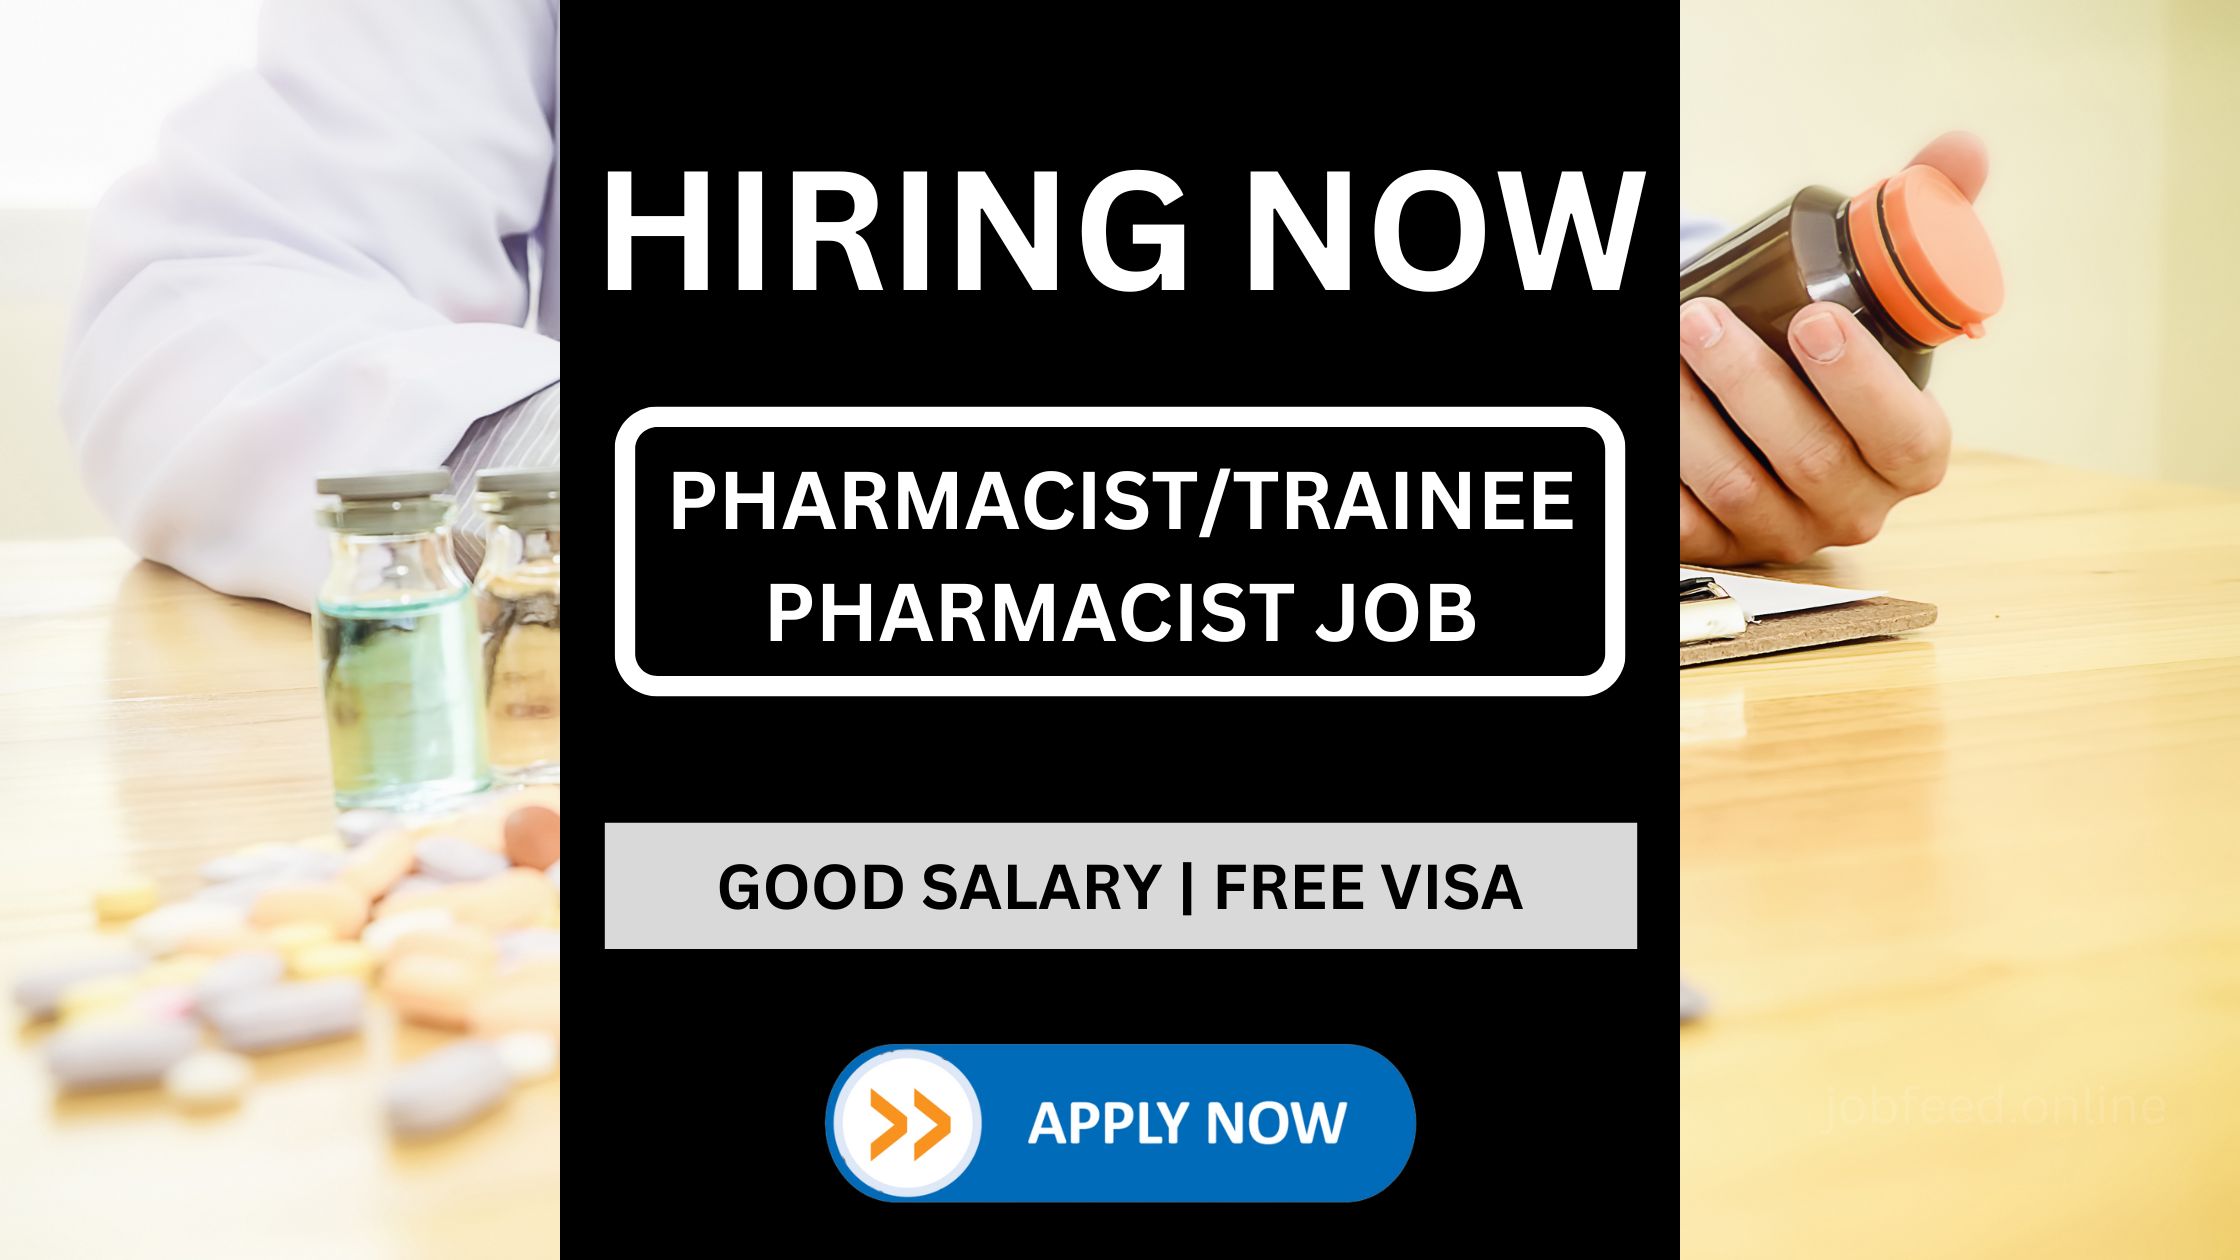 Pharmacist/Trainee Pharmacist Job Opportunity in UAE - Apply Now!